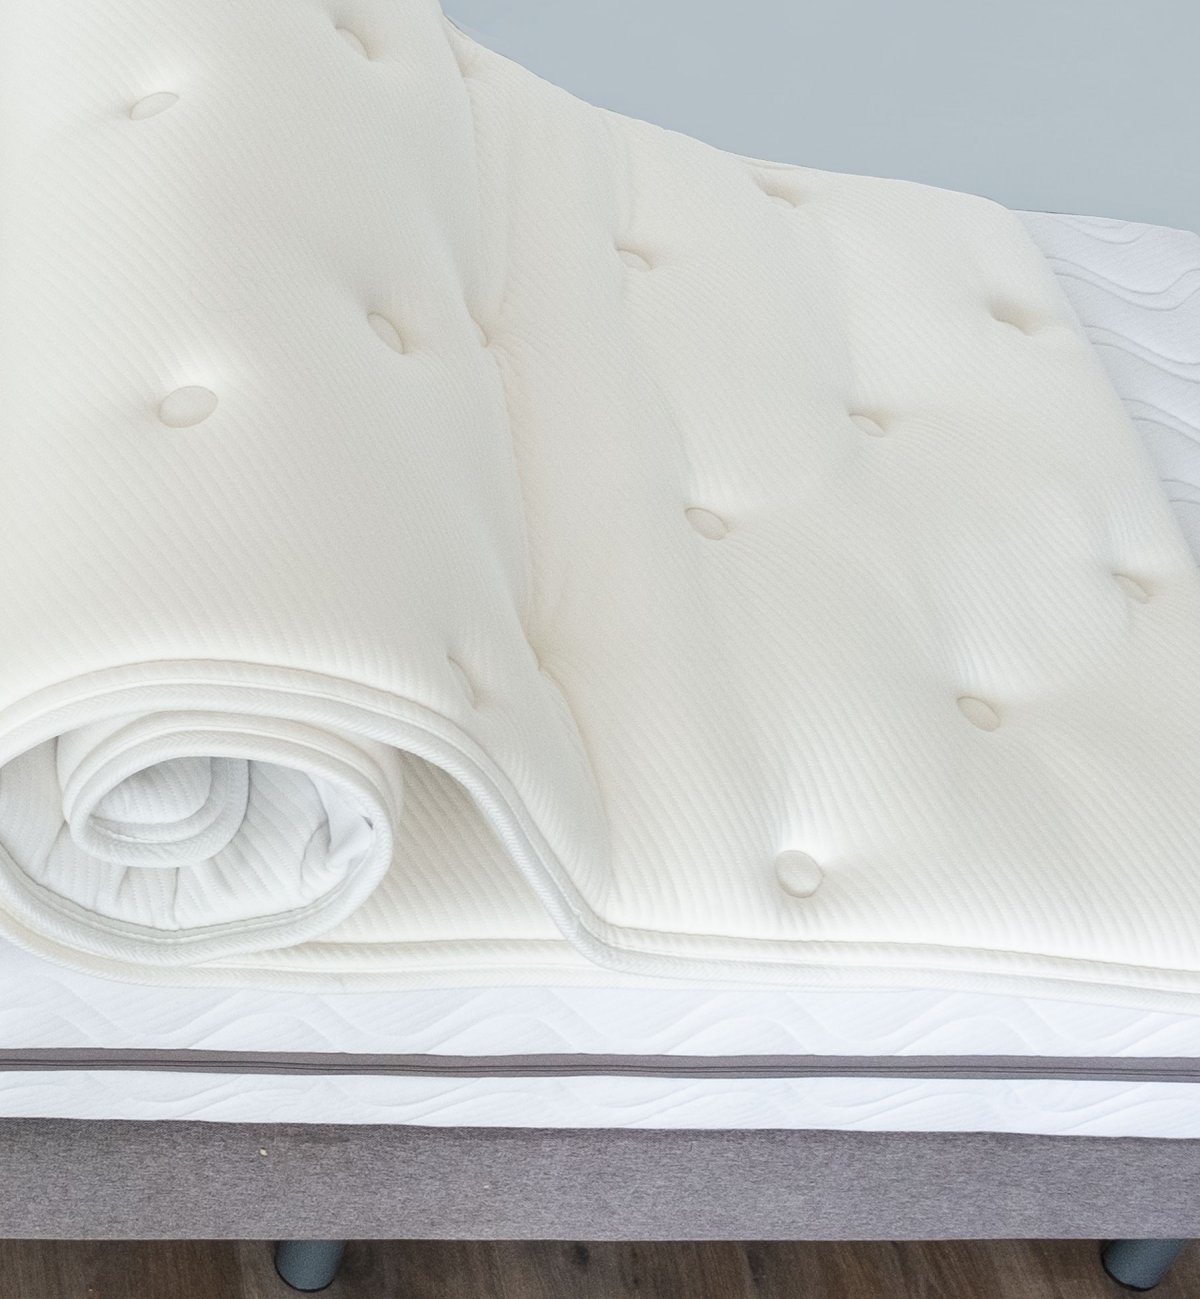 Memory foam mattress overlay for 2 people Memoform